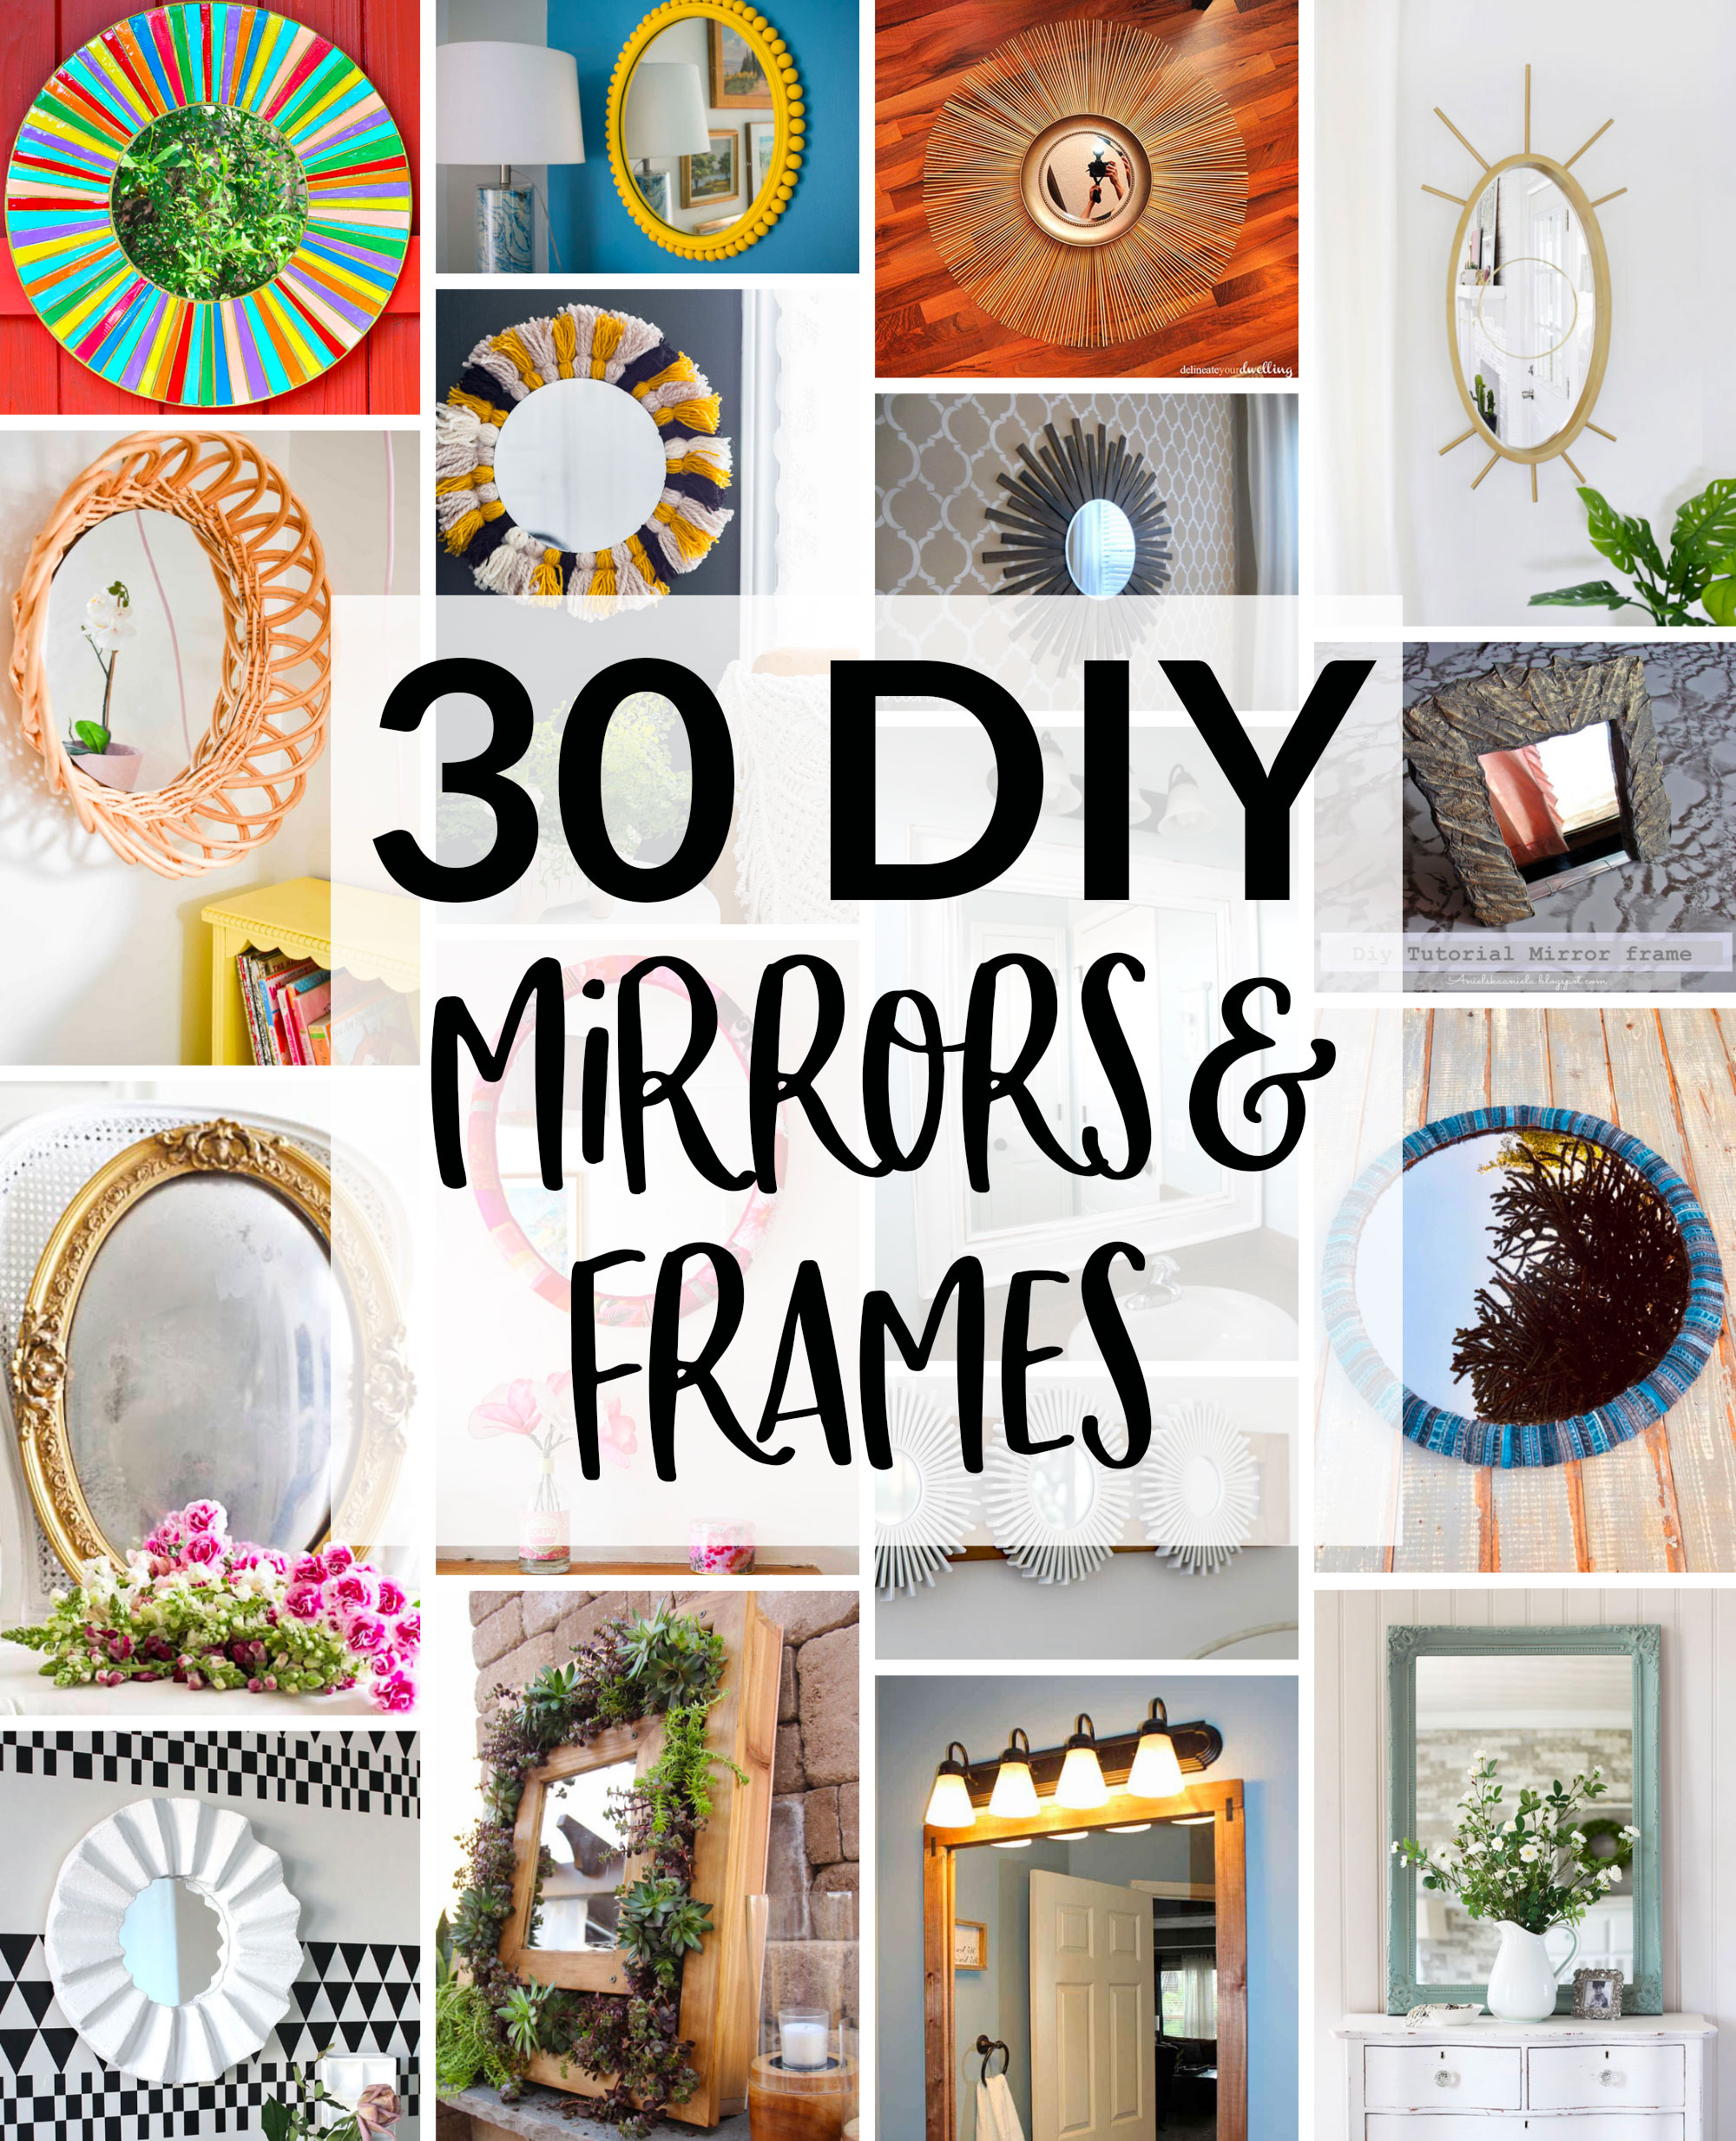 30 Diy Mirror Frames Scratch And Stitch, Decorative Mirror Frame Ideas